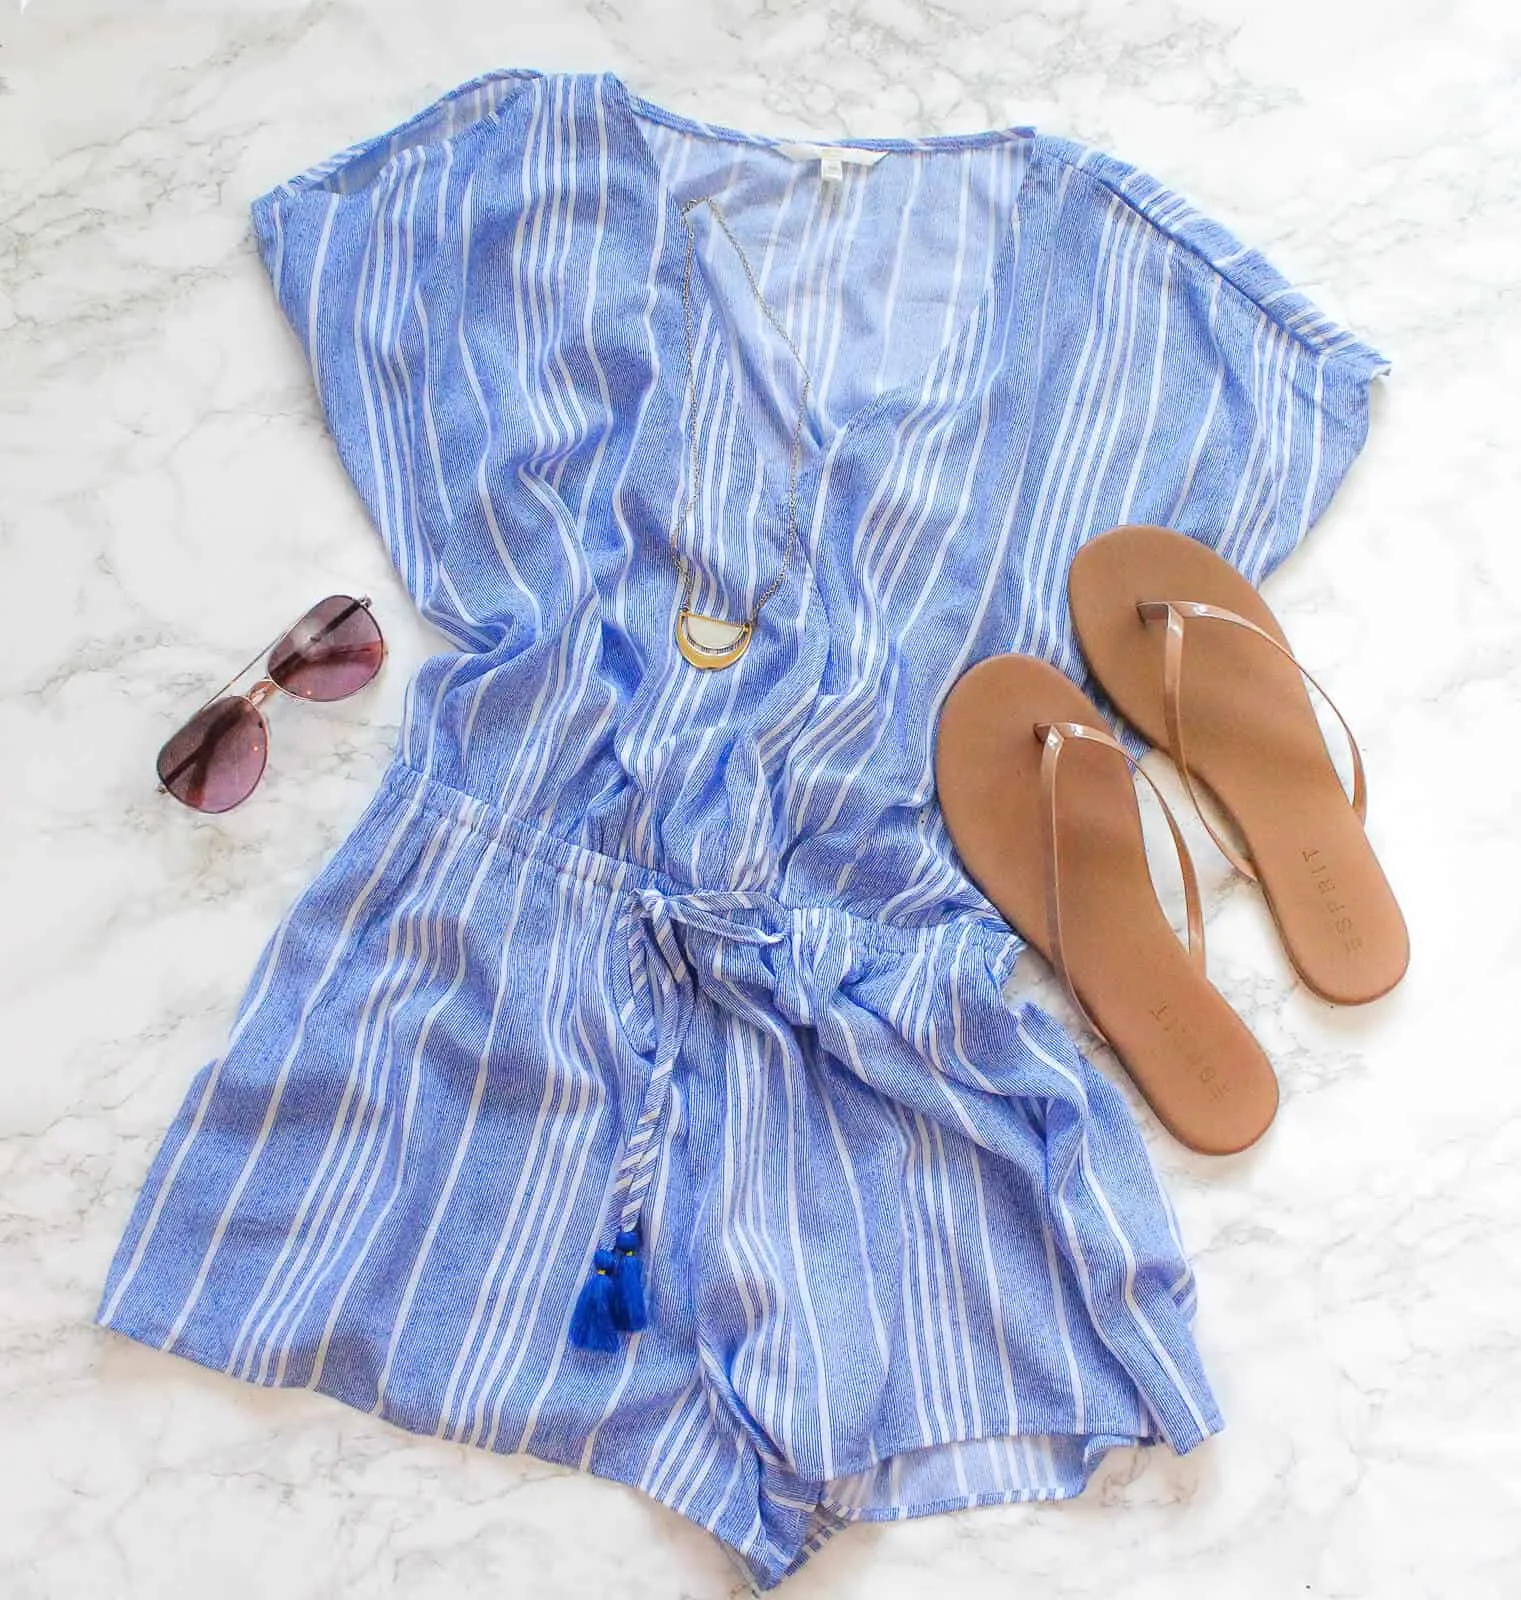 Blue summer dress next to flip flops and sunglasses.